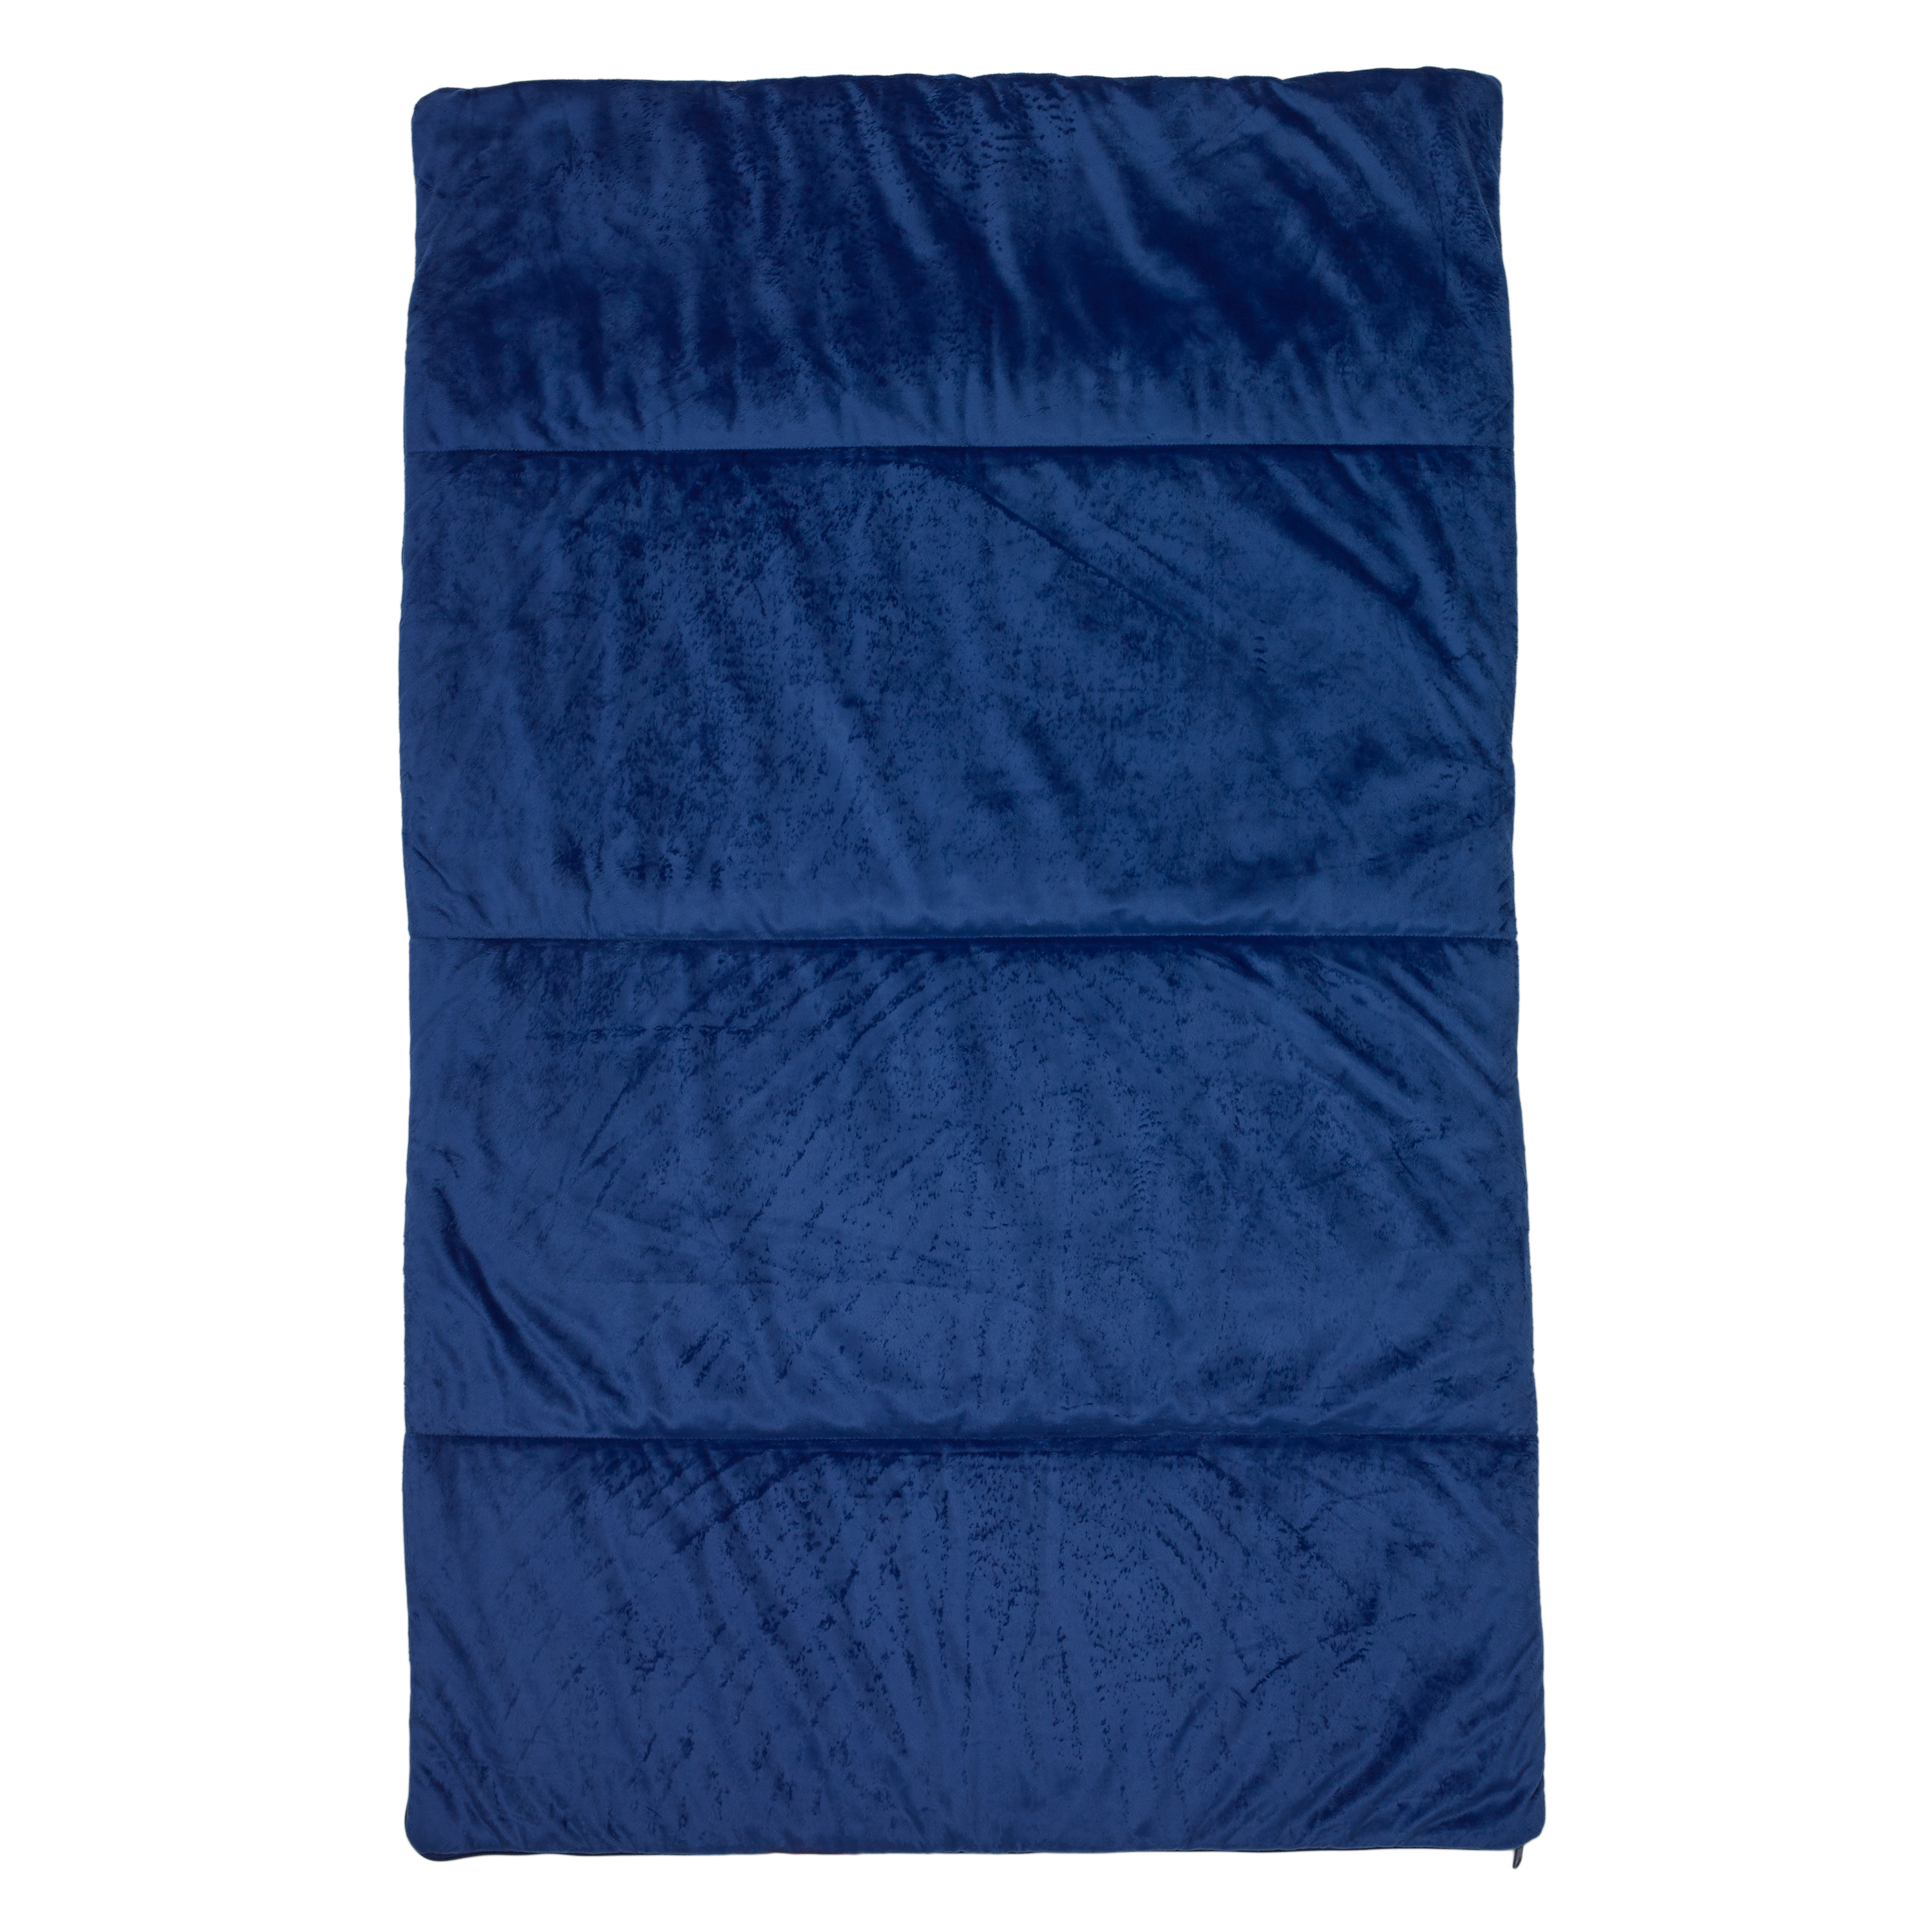 Kids Weighted Blanket Sleeping Bag, 36 x 48, 5lbs - image 4 of 7